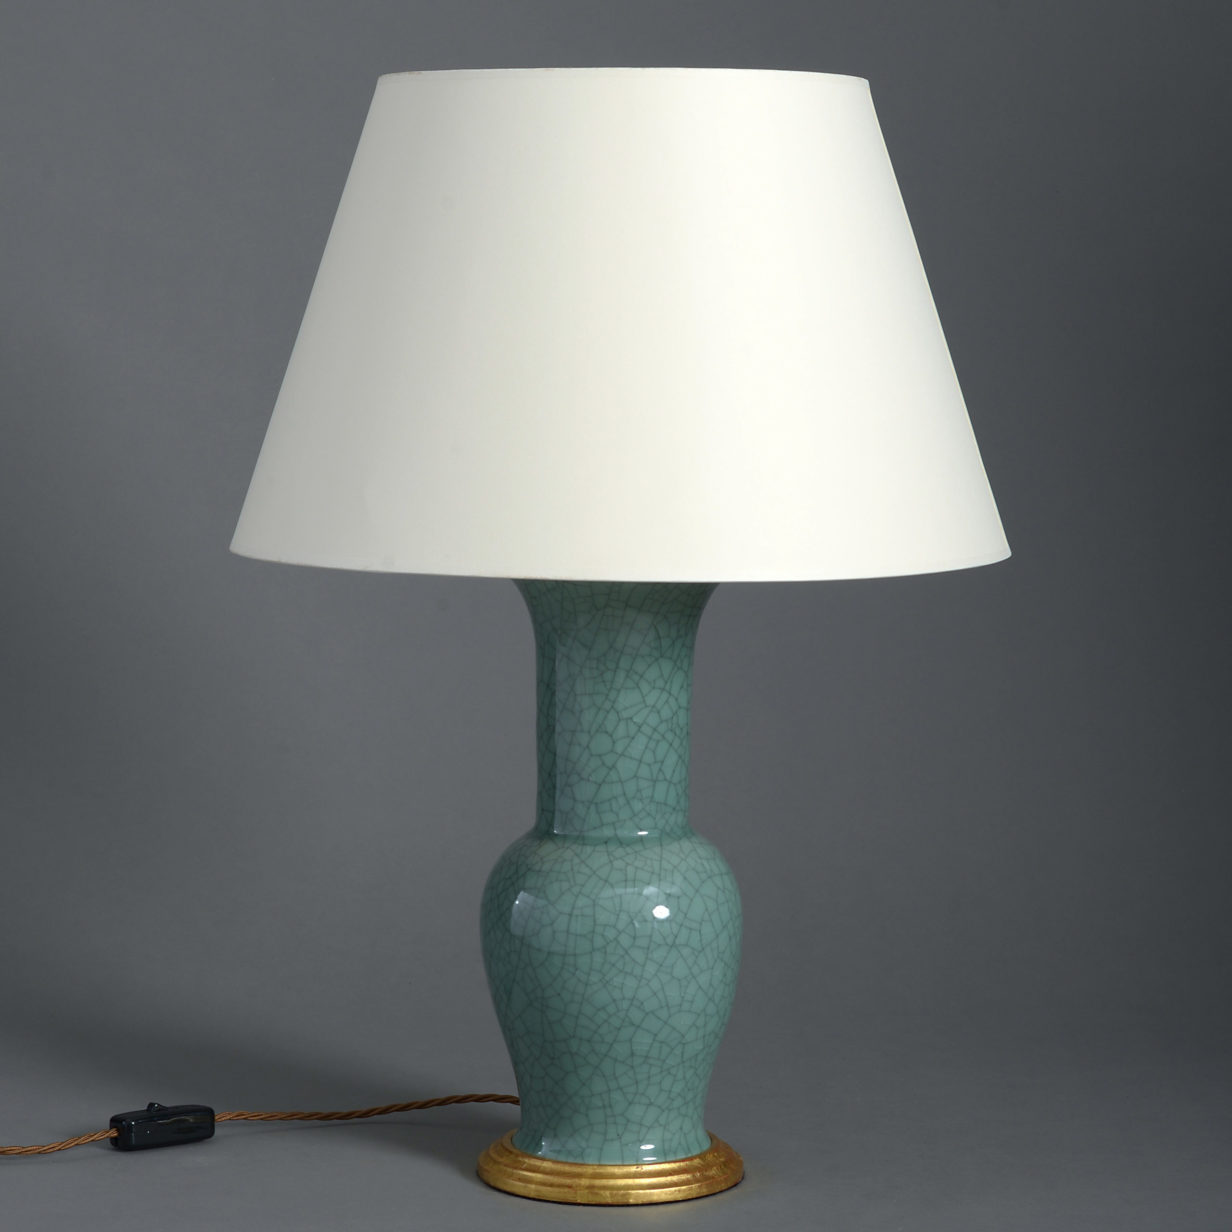 Smaller celadon vase lamp